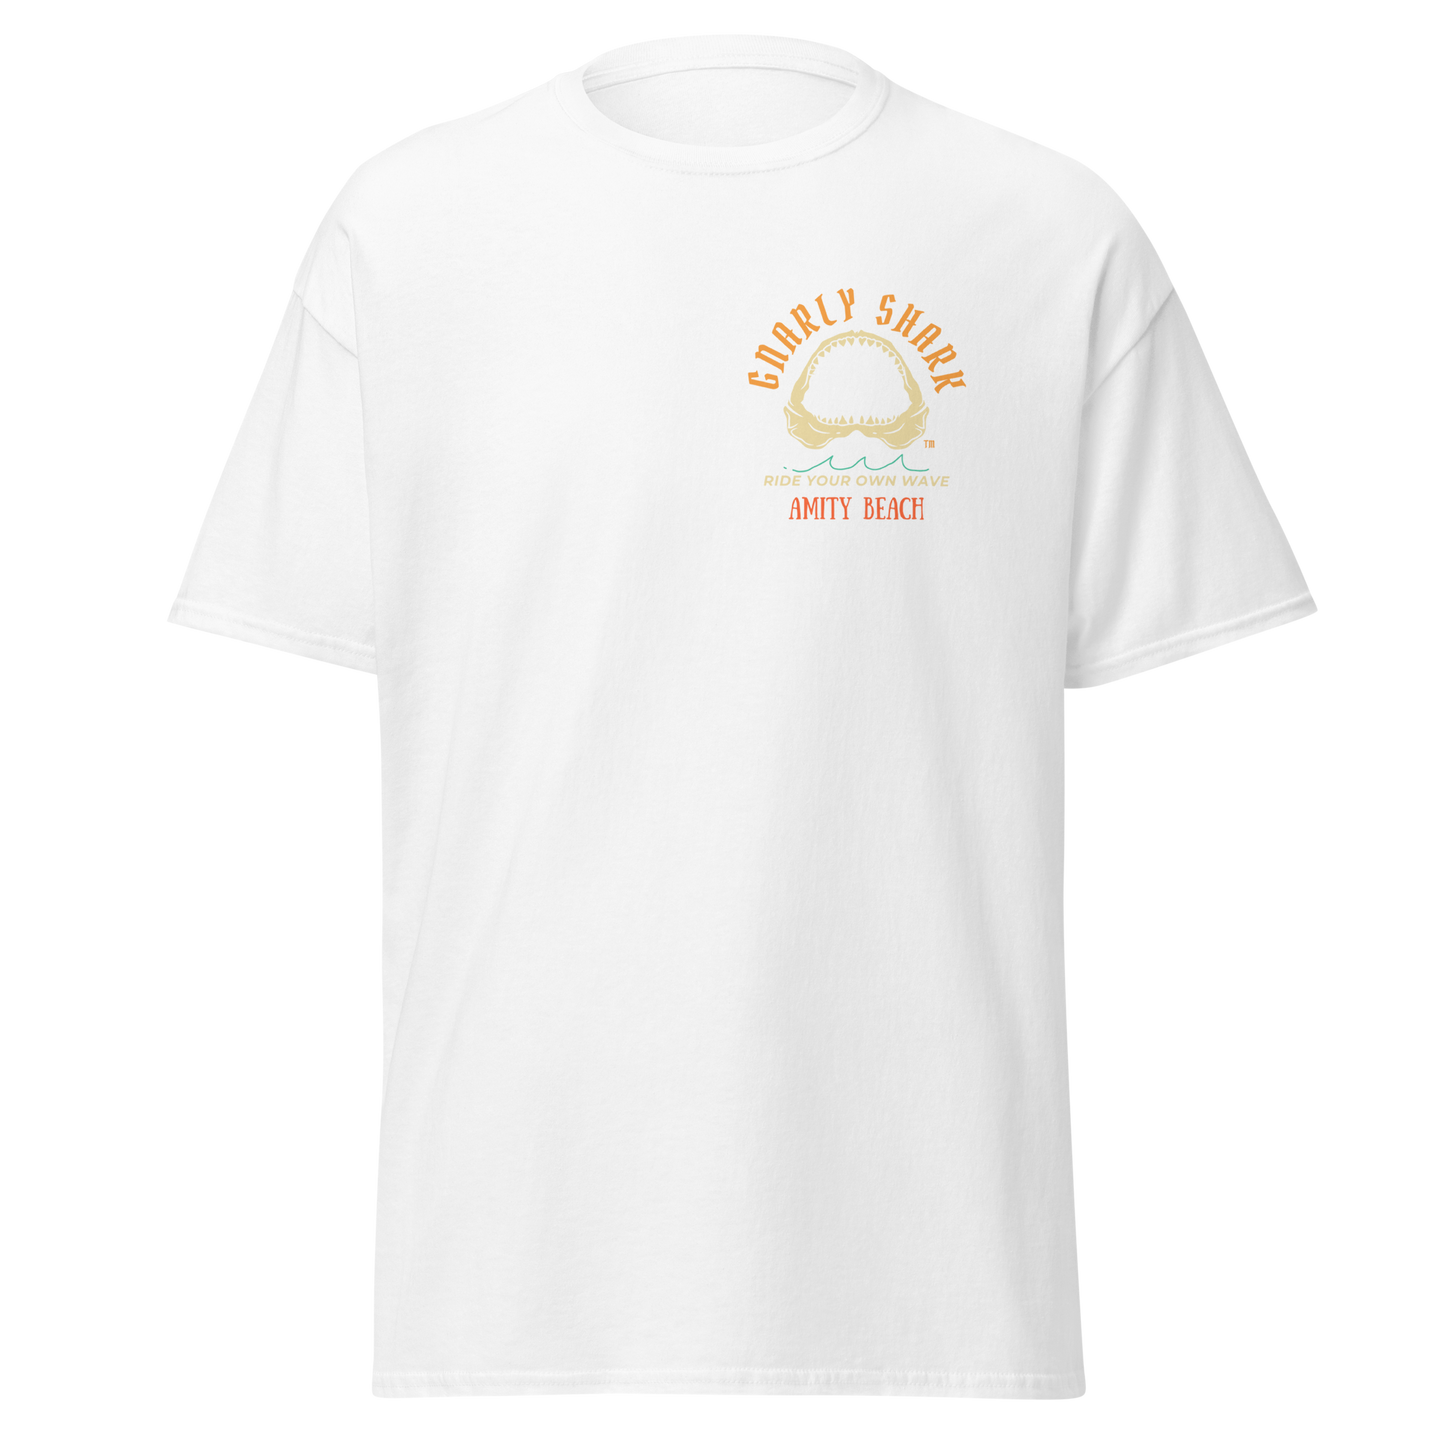 Gnarly Shark Amity Beach T- shirt - Front / Back - Gildan classic 5000